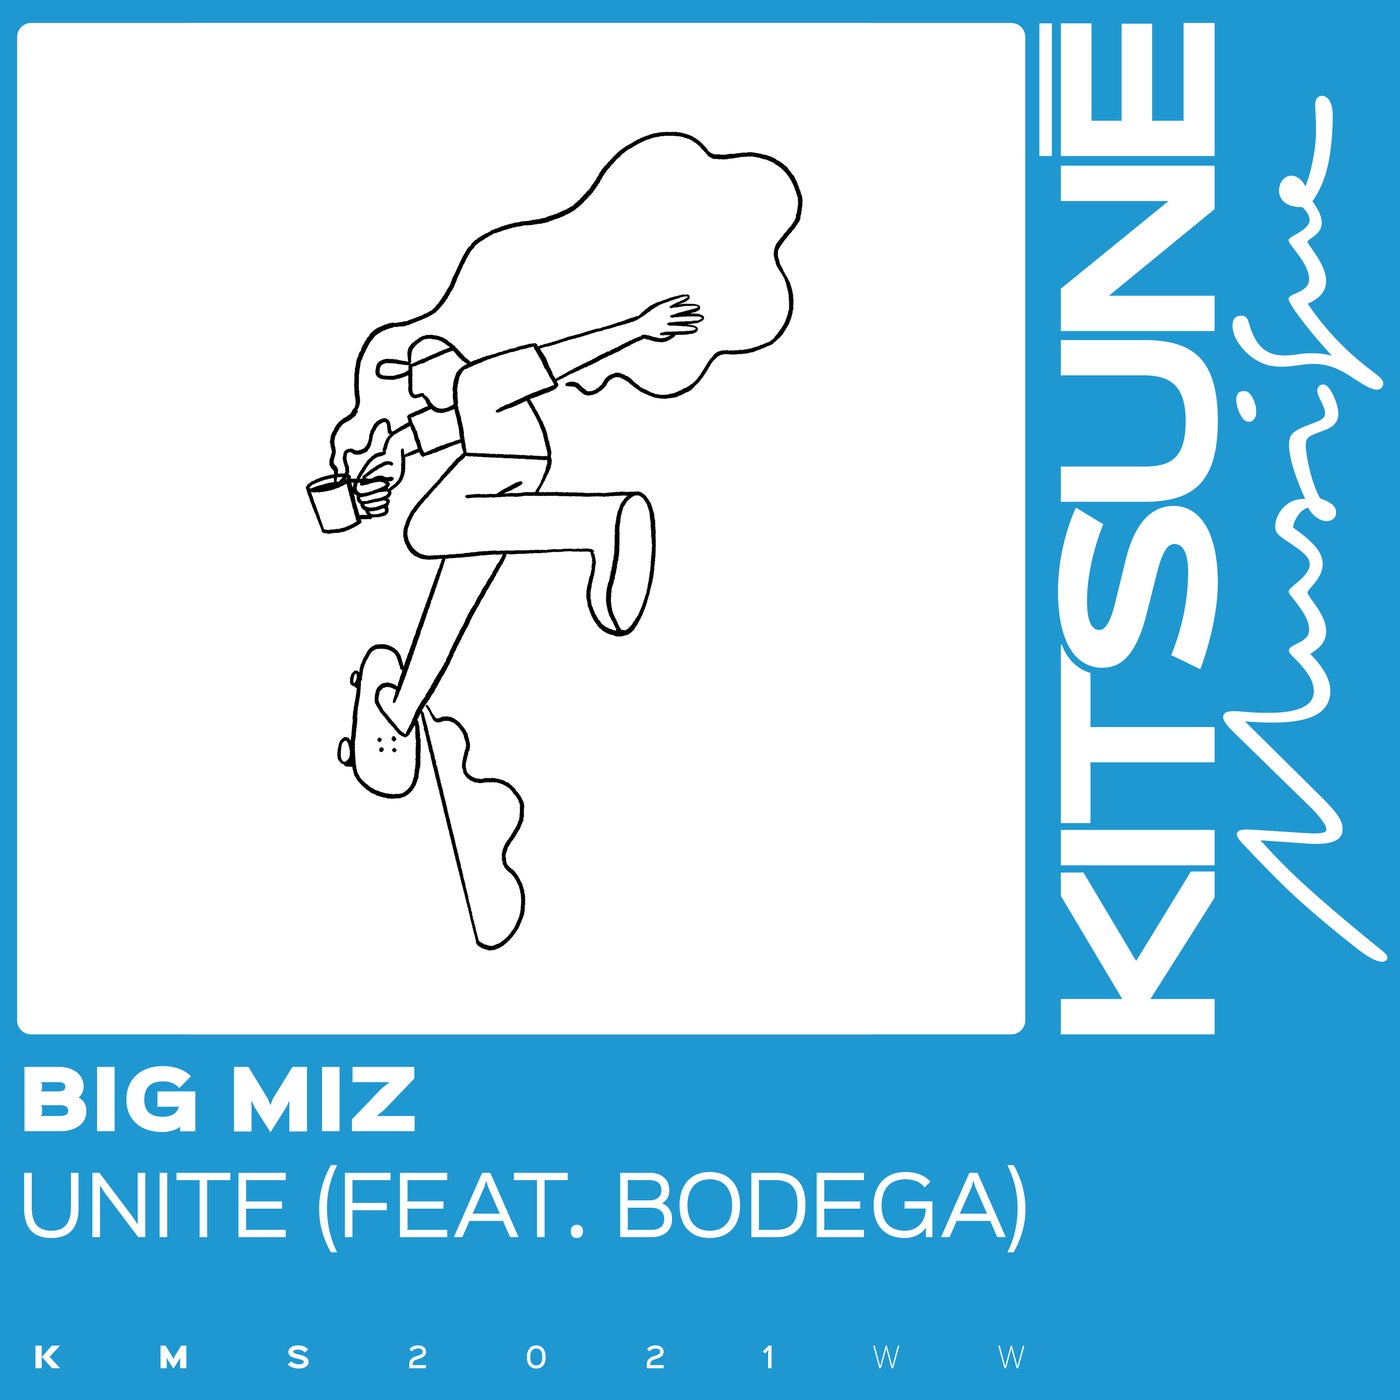 Unite (feat. BODEGA)